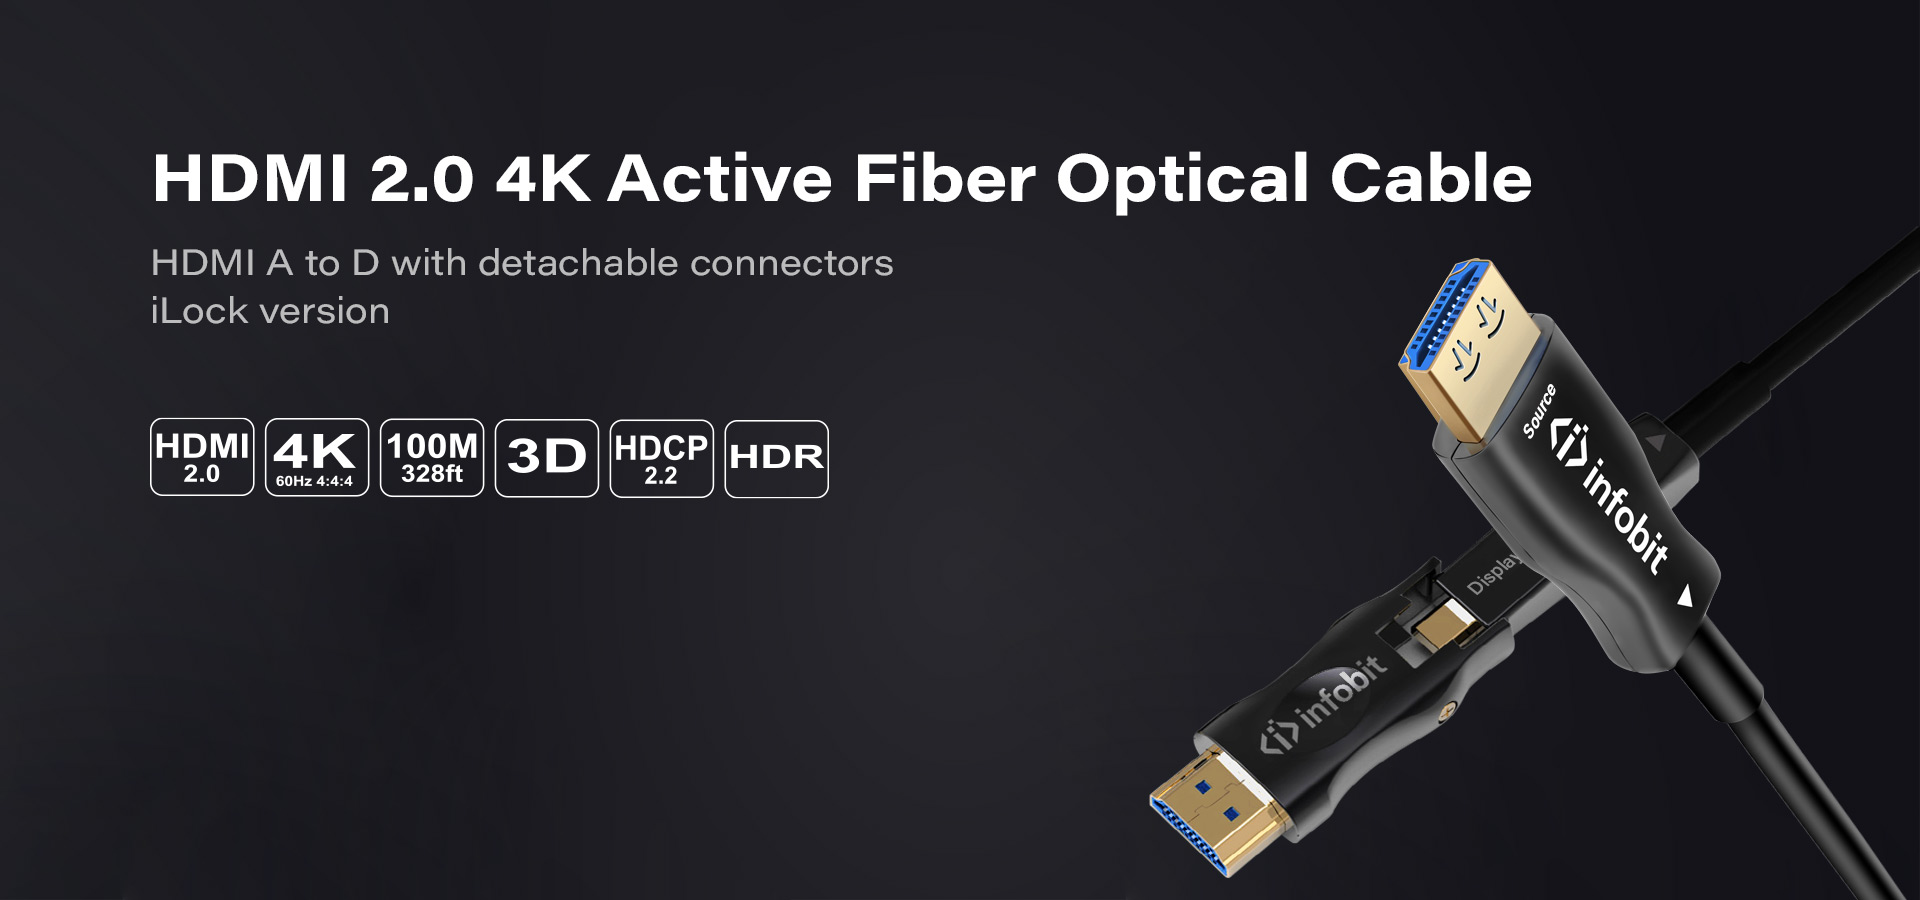 AD: HDMI A to D detachable connectors with iLock